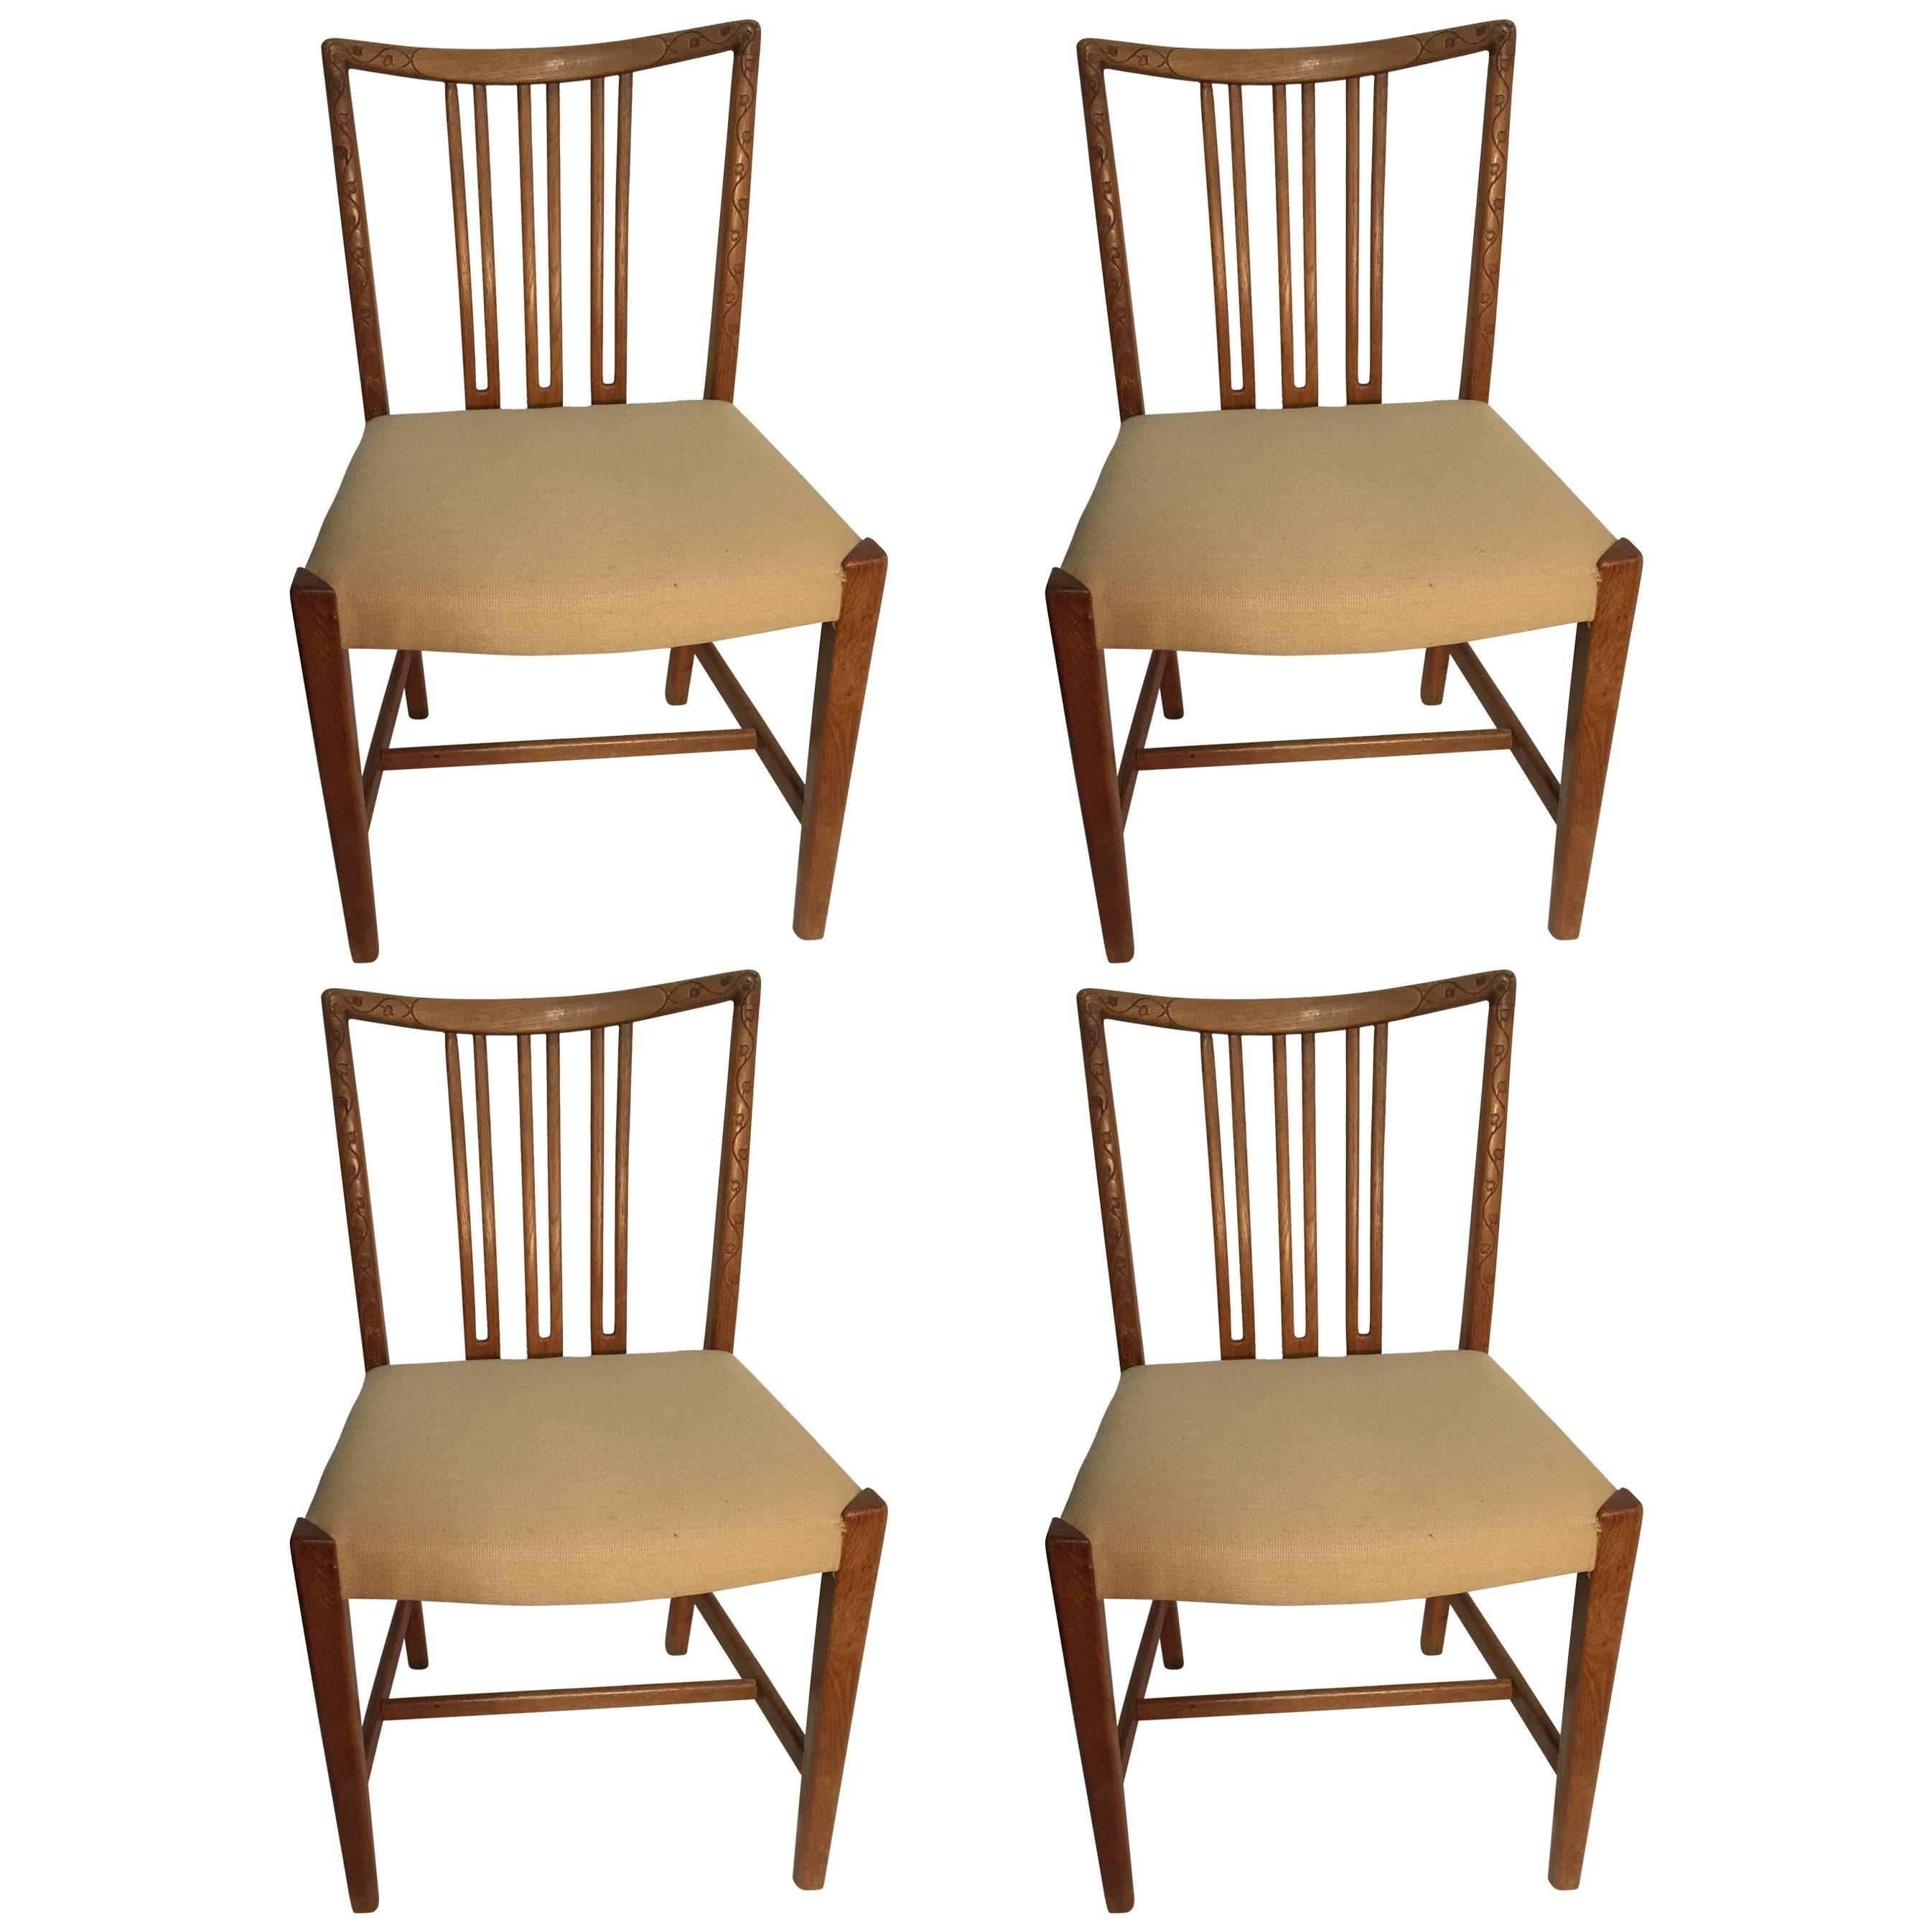 Four Hans Wegner Dining Chairs